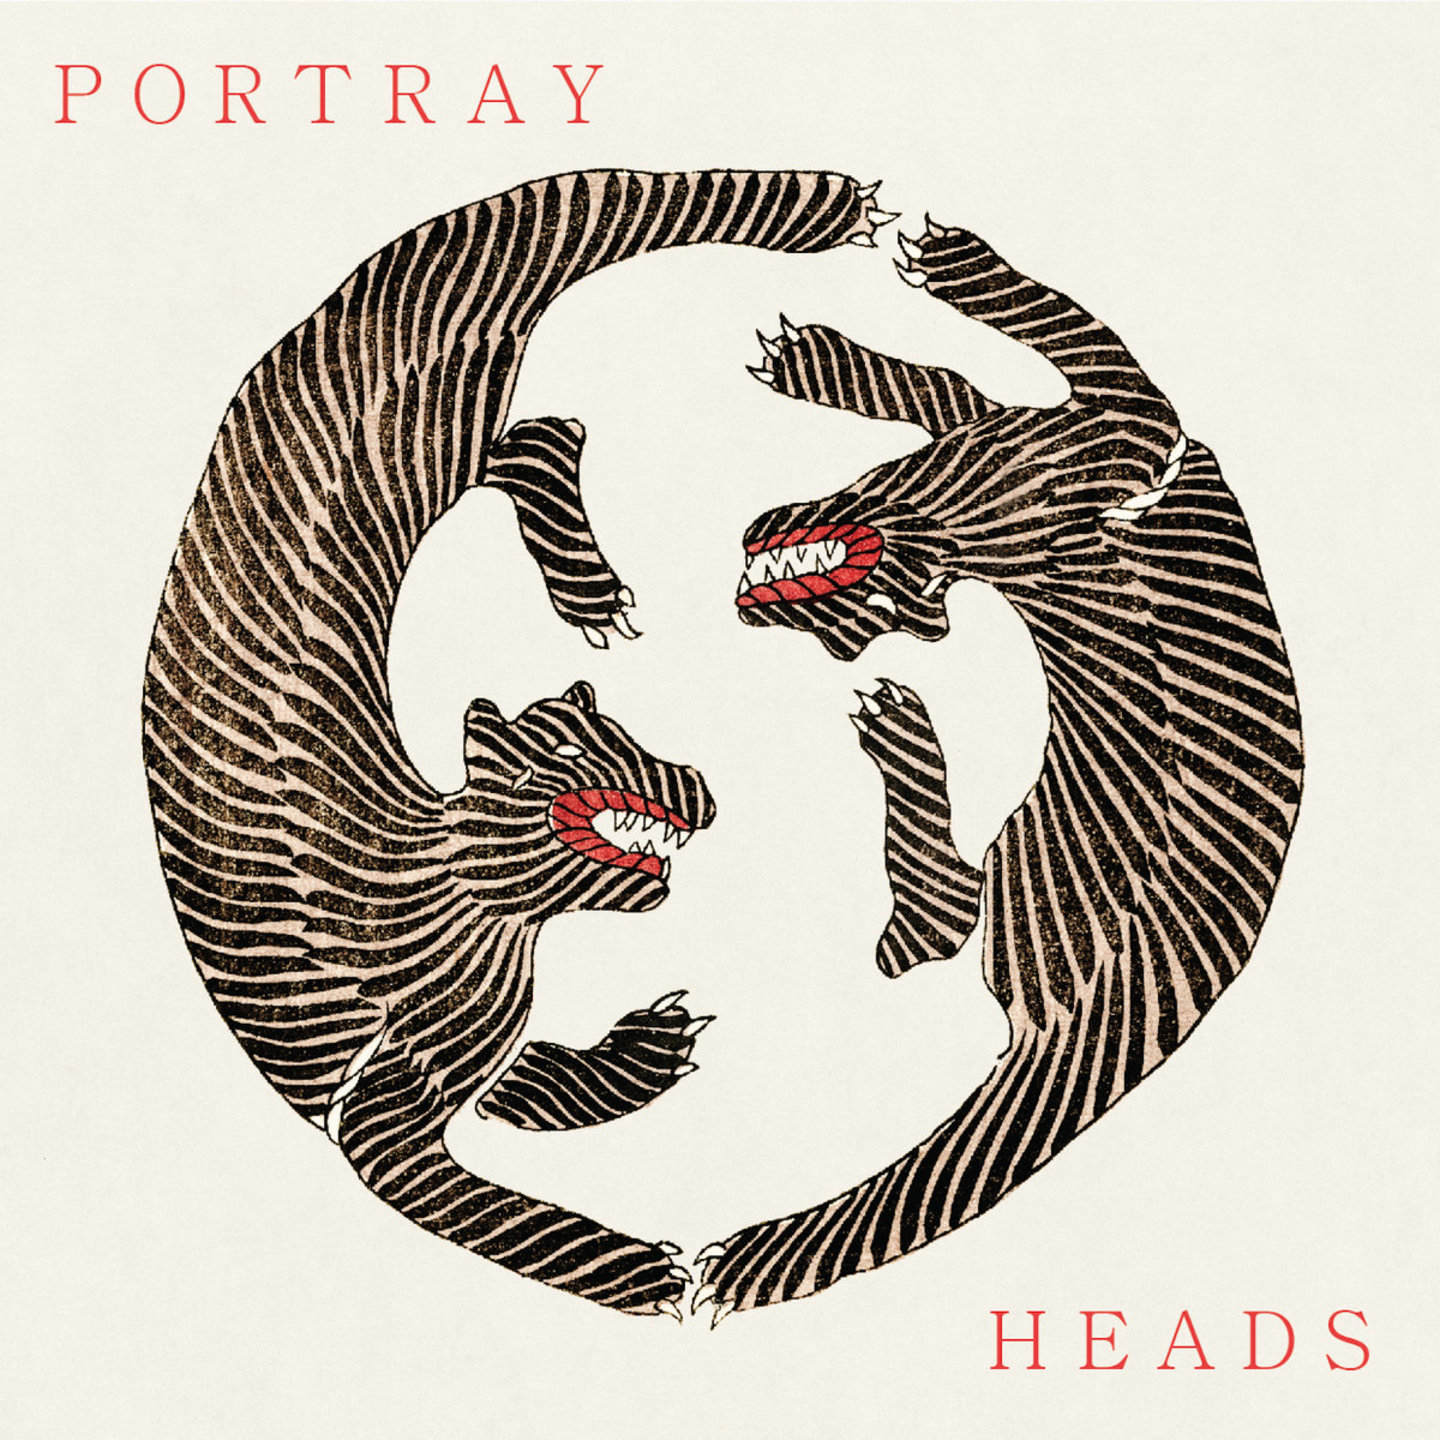 PORTRAY HEADS - Potray Heads 2xLP Gatefold cover